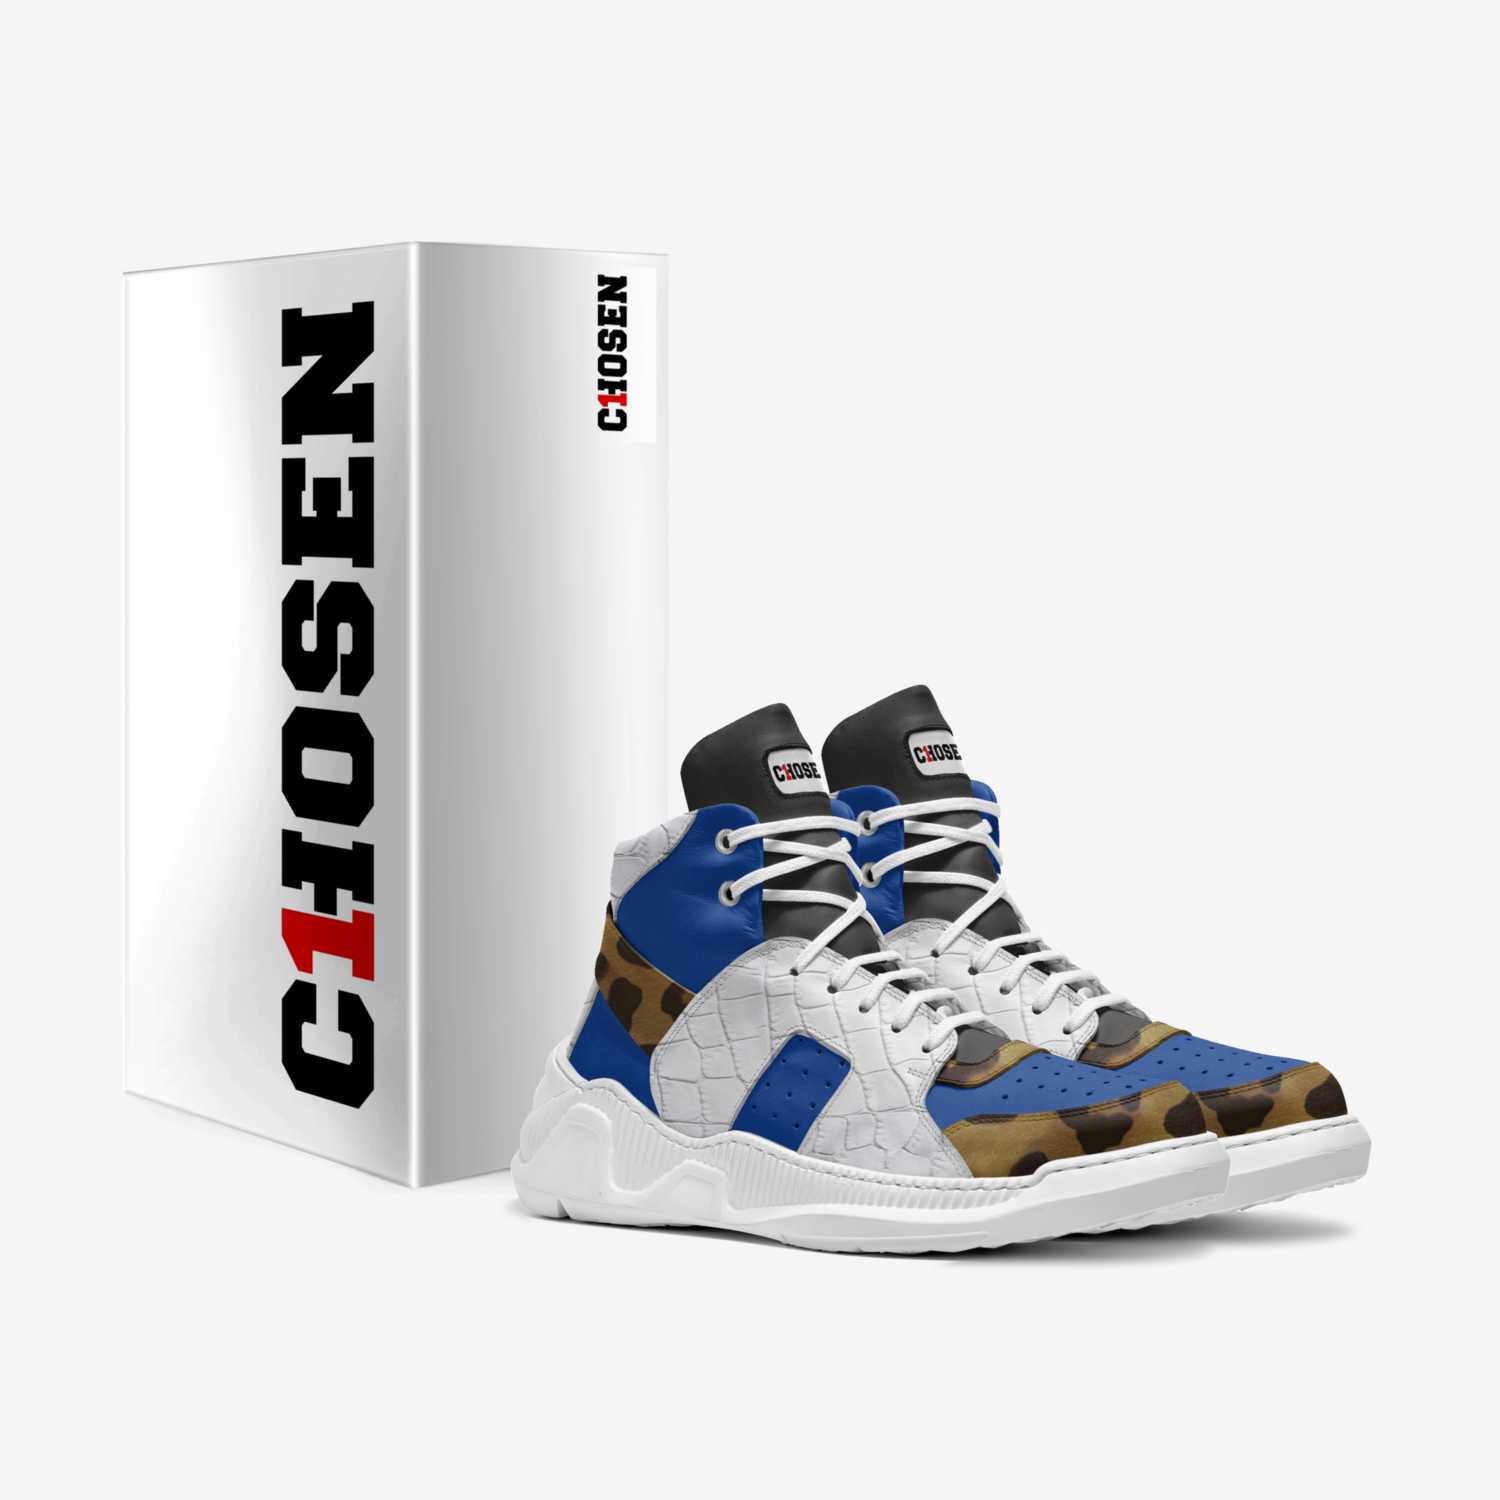 chosen1 A Custom Shoe concept by Luis